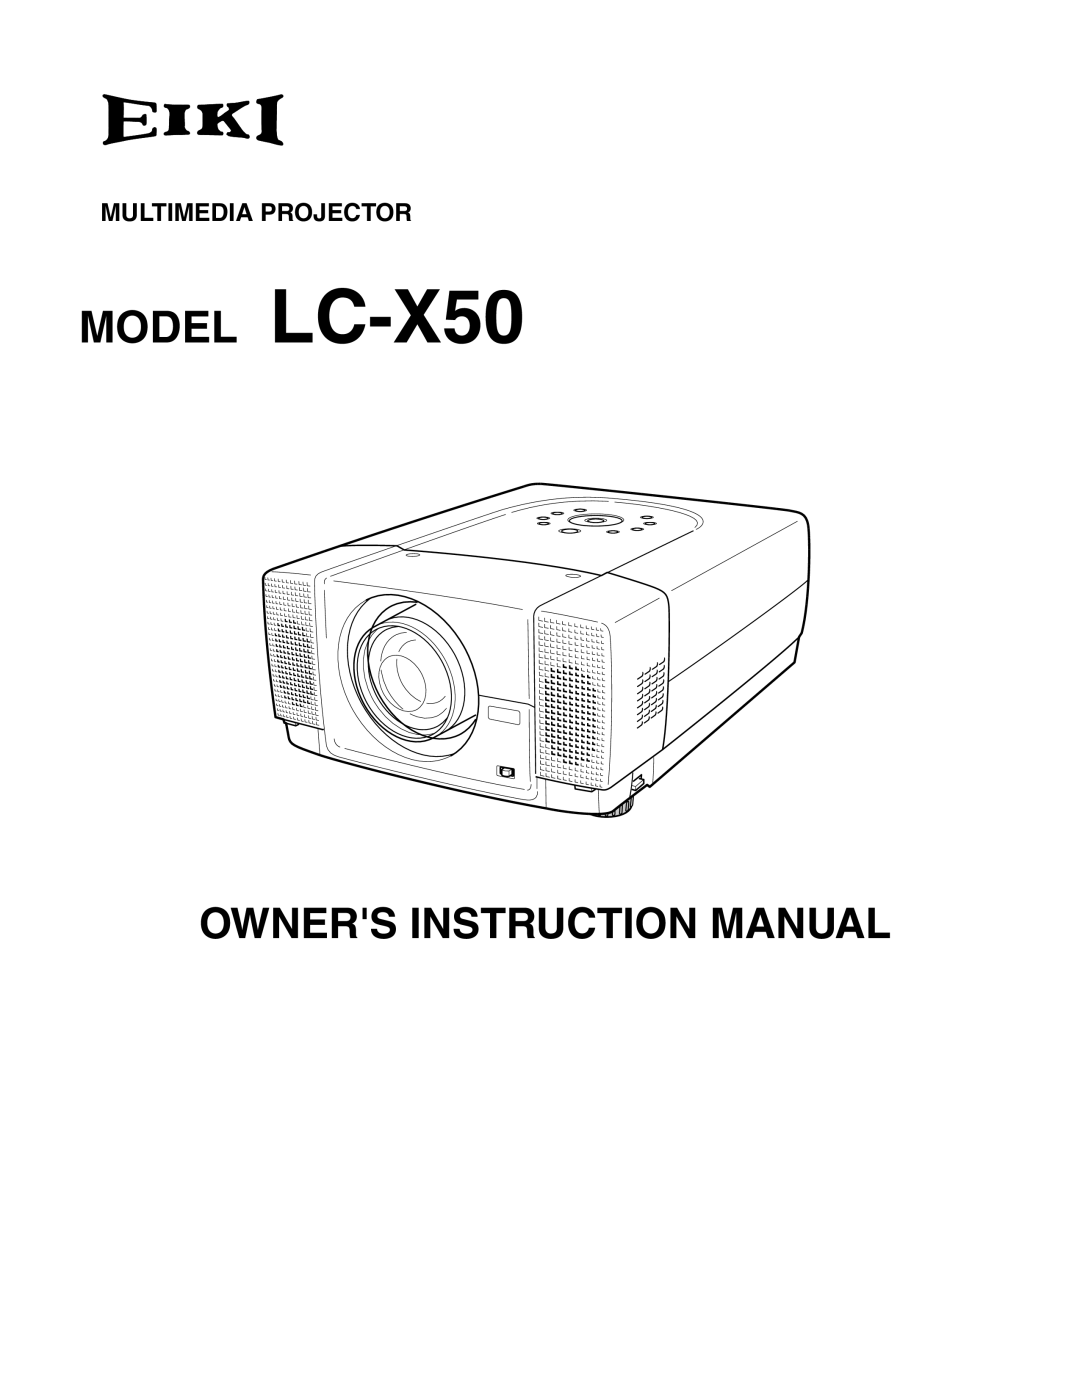 Eiki instruction manual MODEL LC-X50 